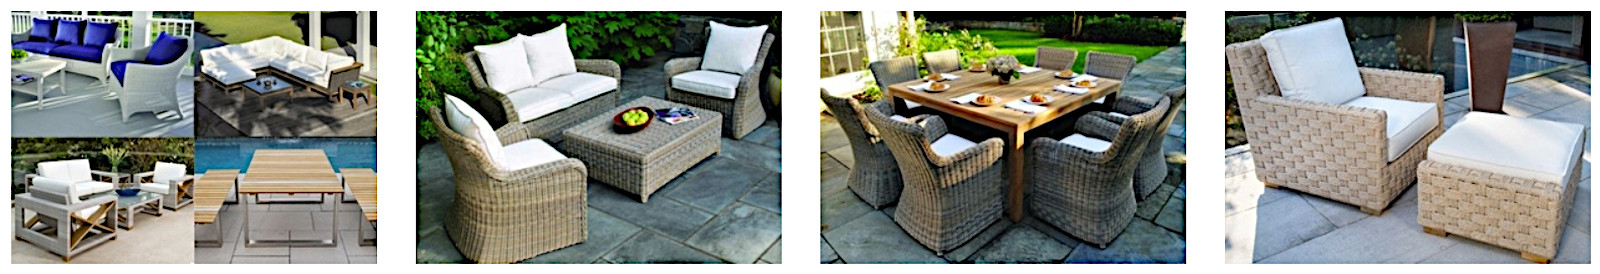 Kingsley Bate teak garden furniture economical price